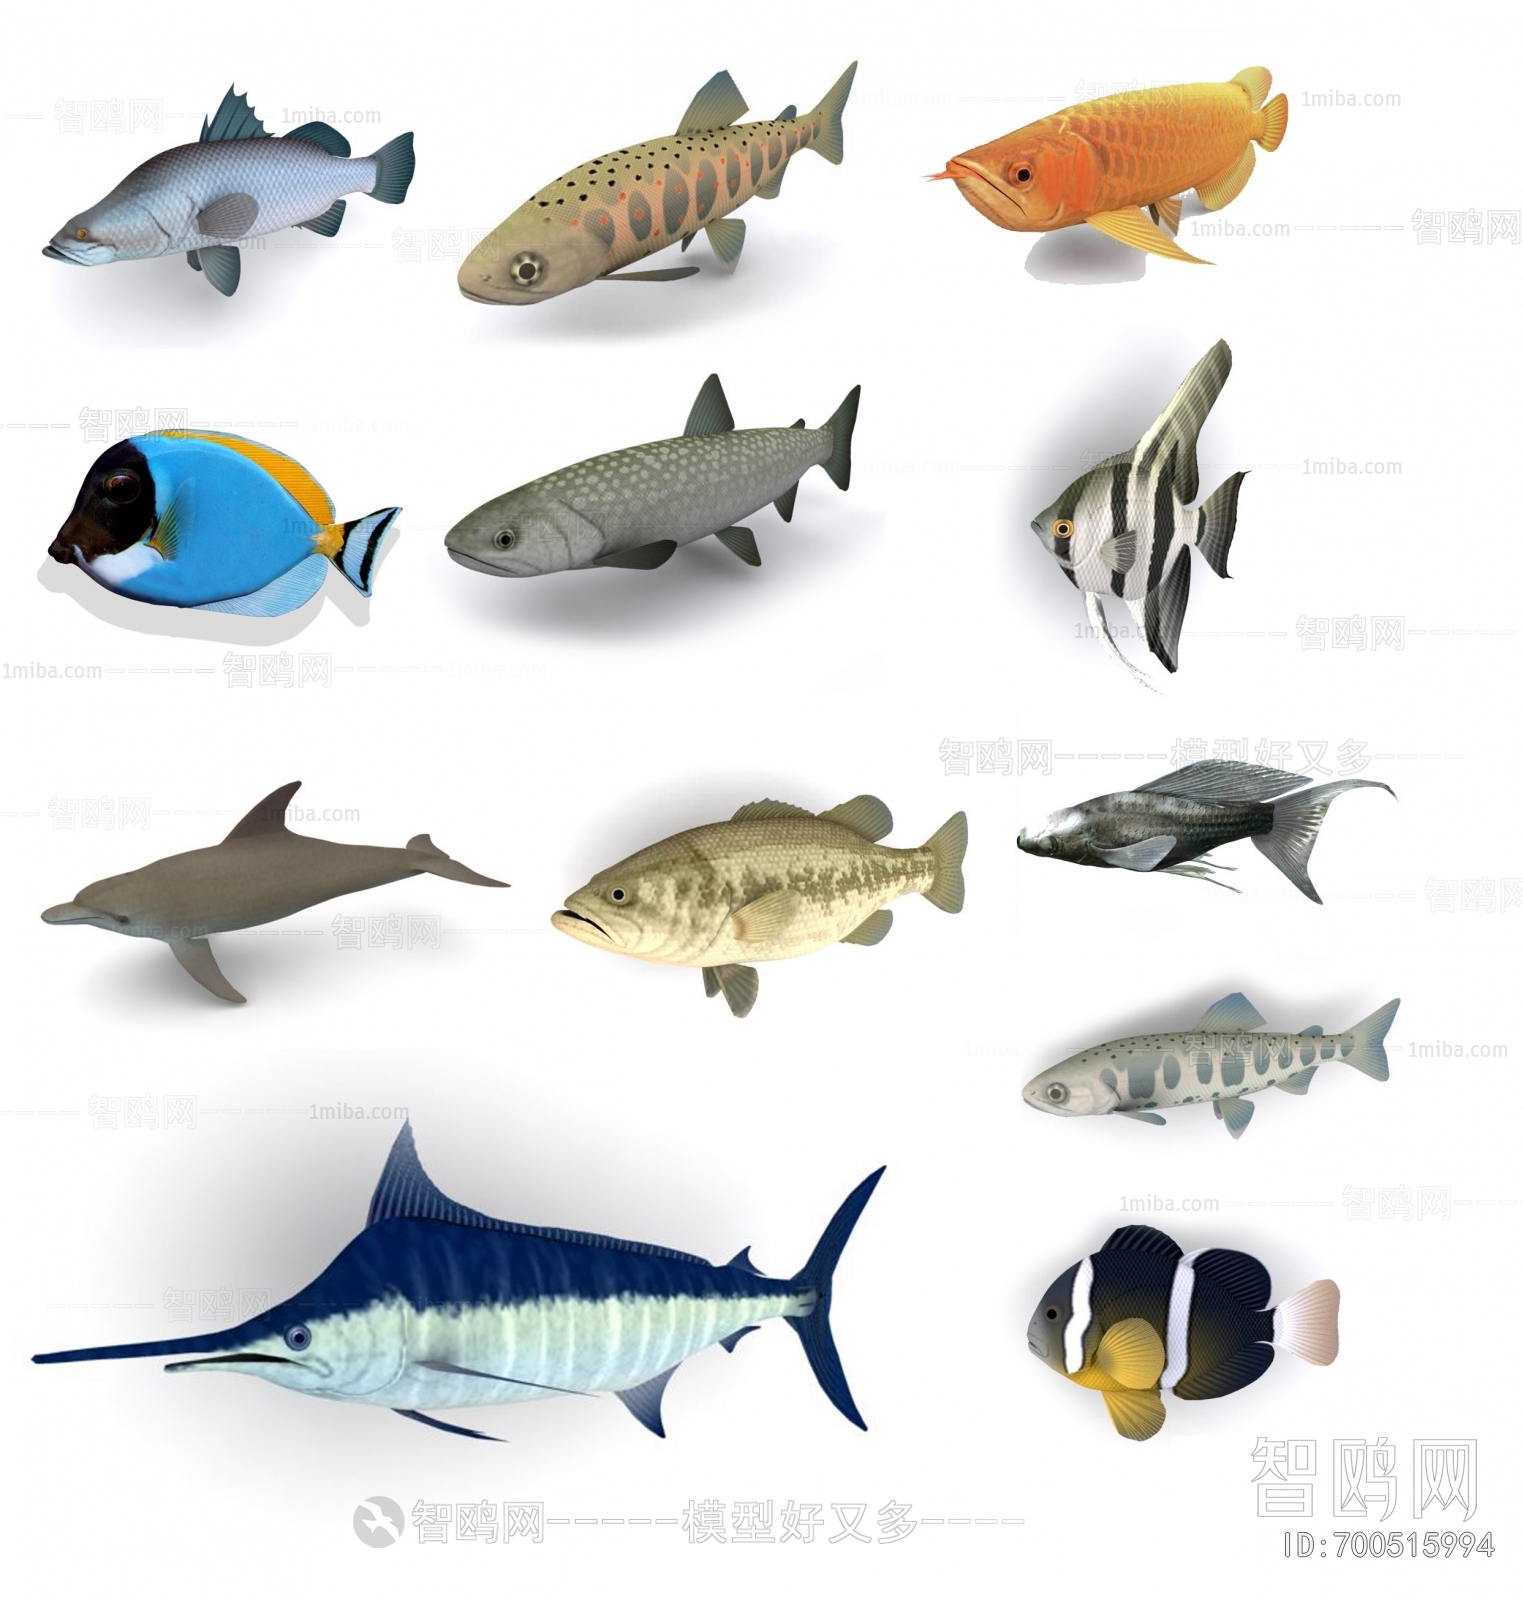 Modern Aquatic Animals